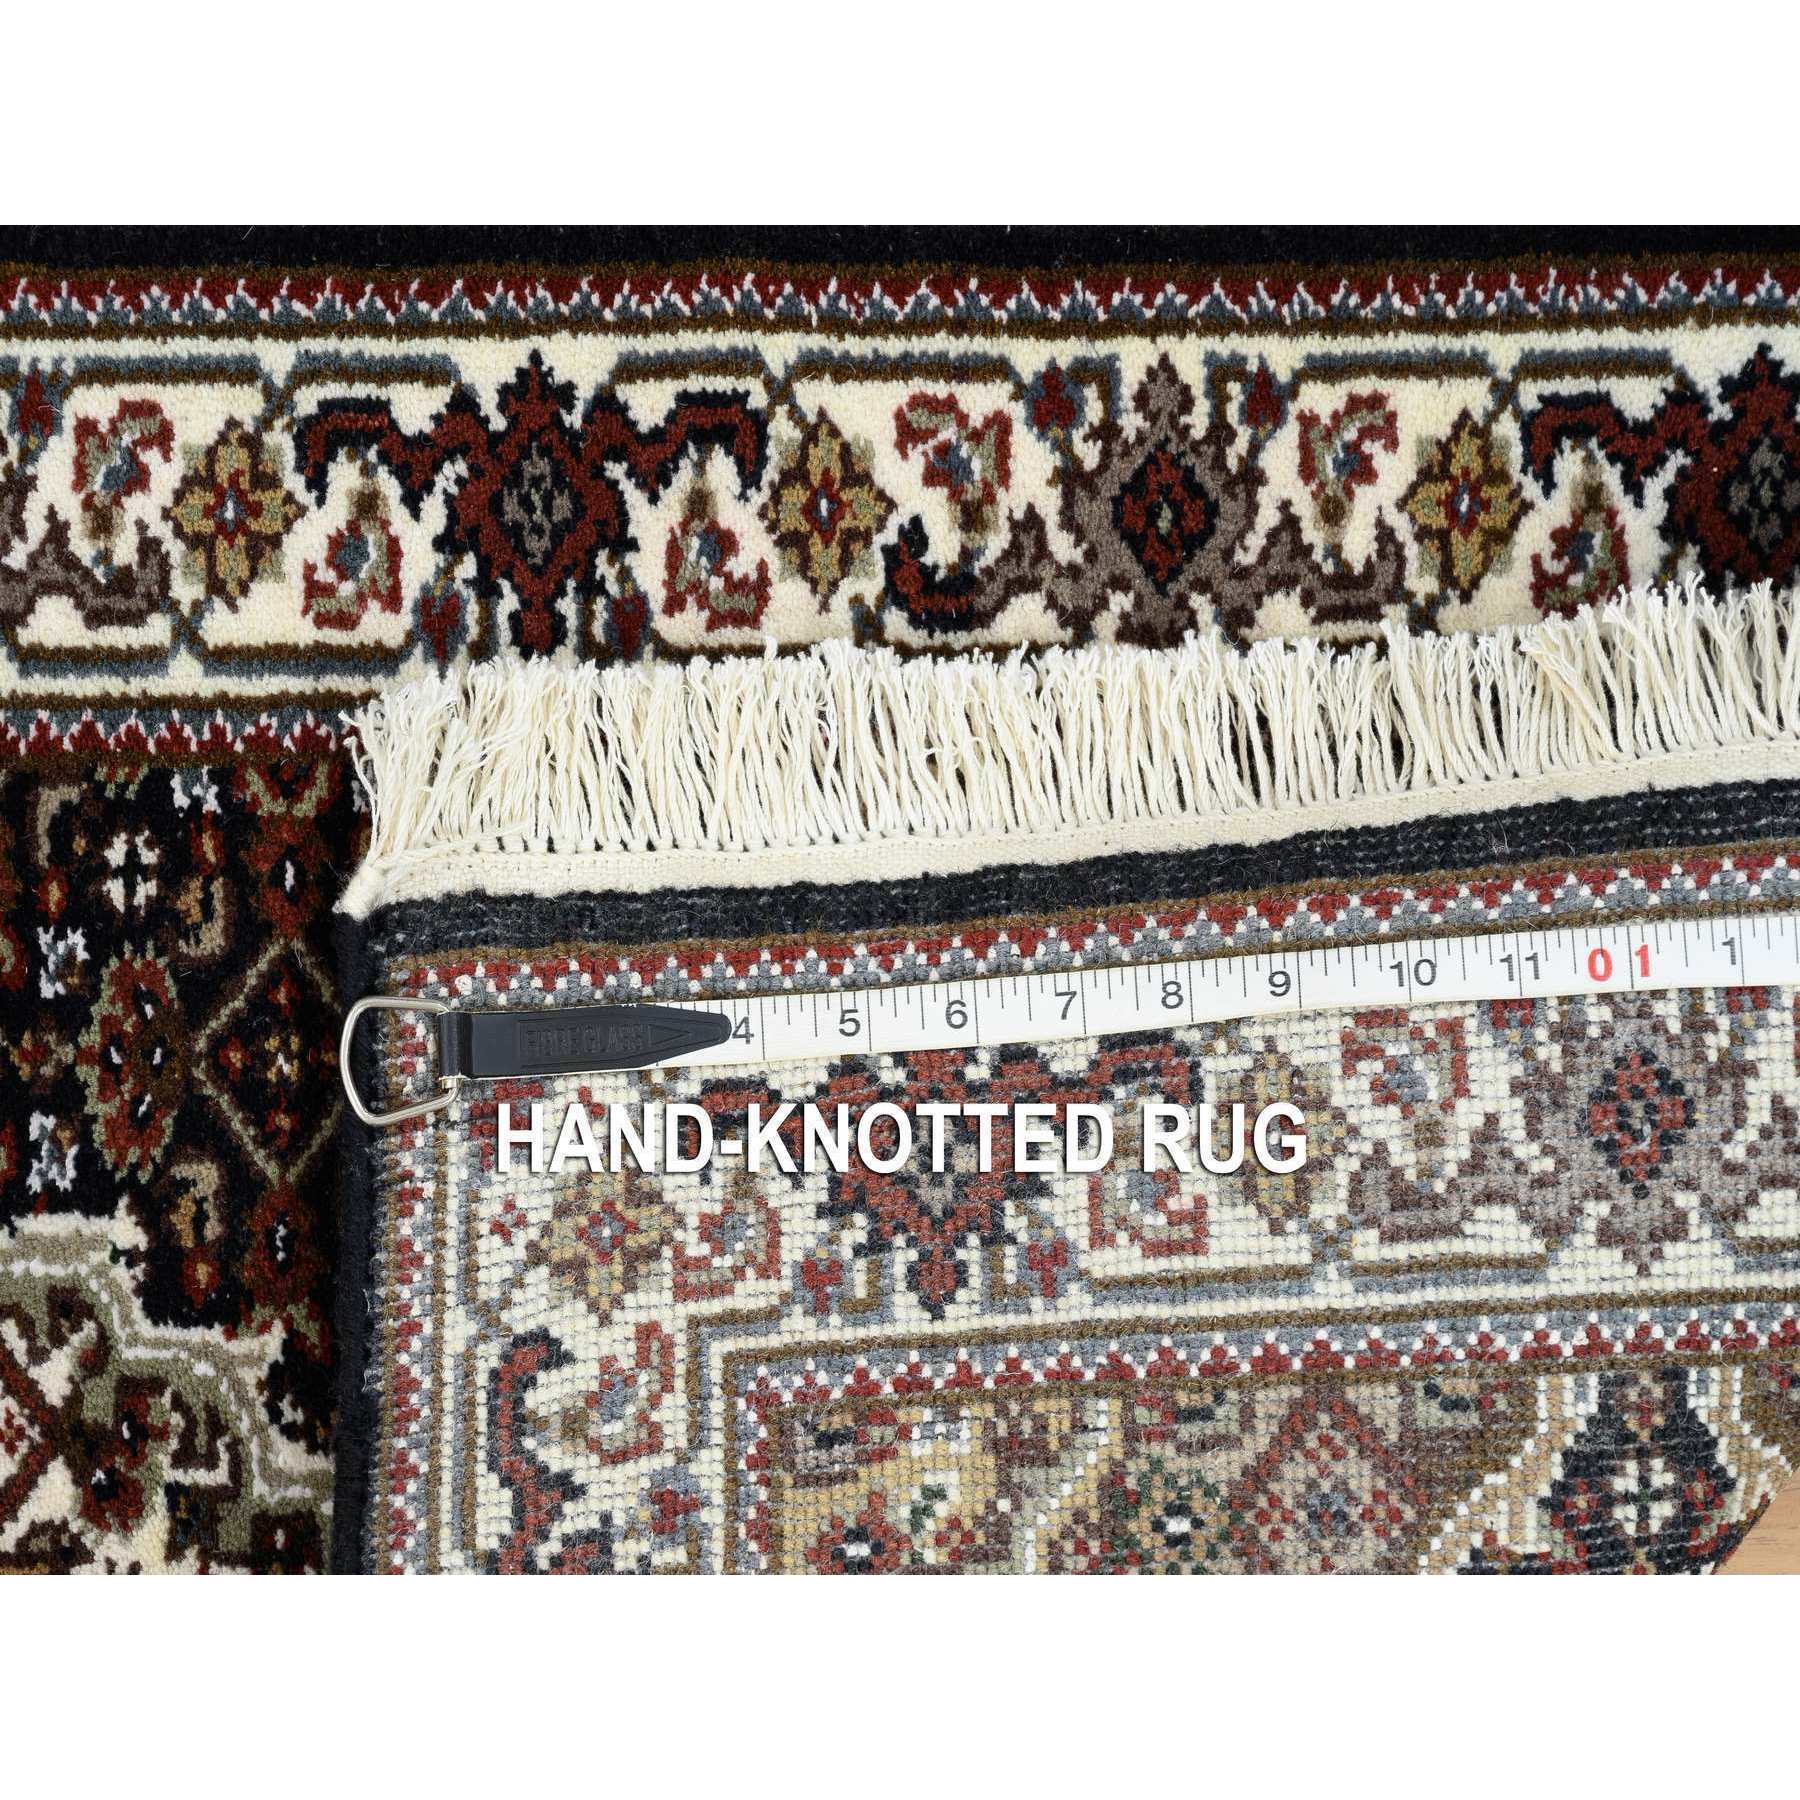 2'x8'2" Rich Black, Tabriz Mahi with Fish Medallion Design, 100% Wool, 175 KPSI, Hand Woven, Runner Oriental Rug 